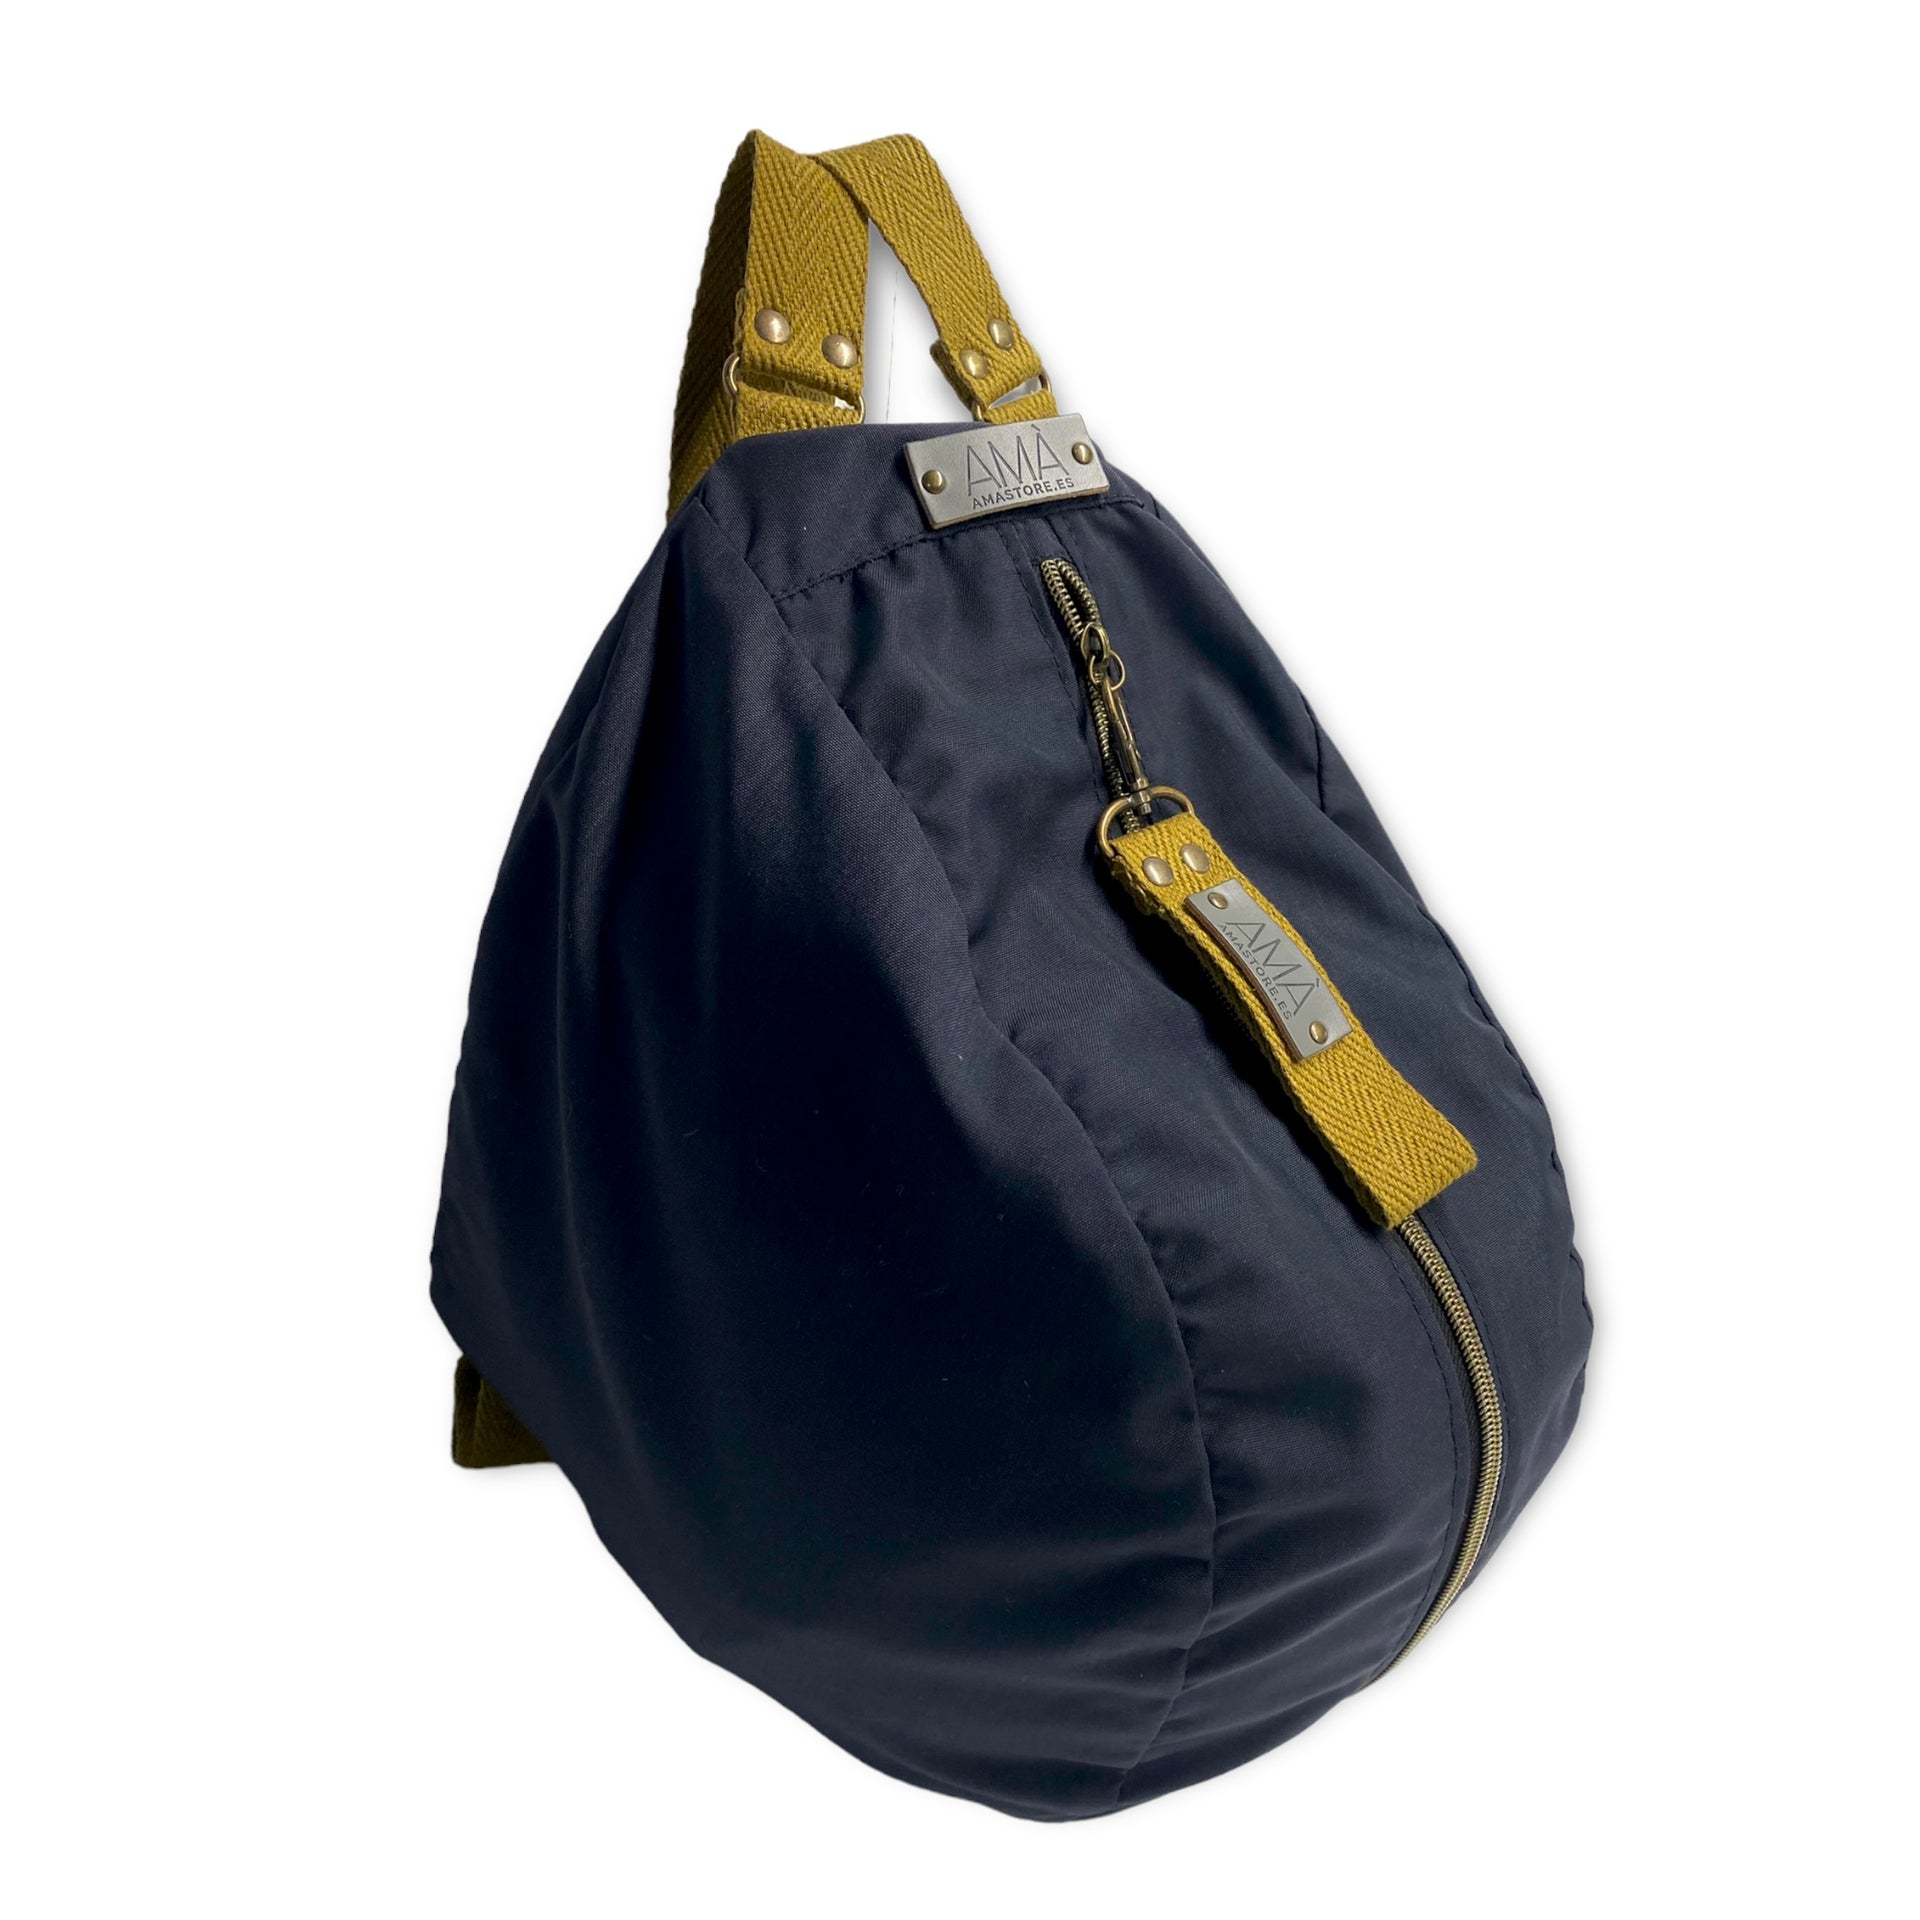 Mochila/Bolsa para casco impermeable - Negra - 59,90€ - 1ENVÍO GRATIS! –